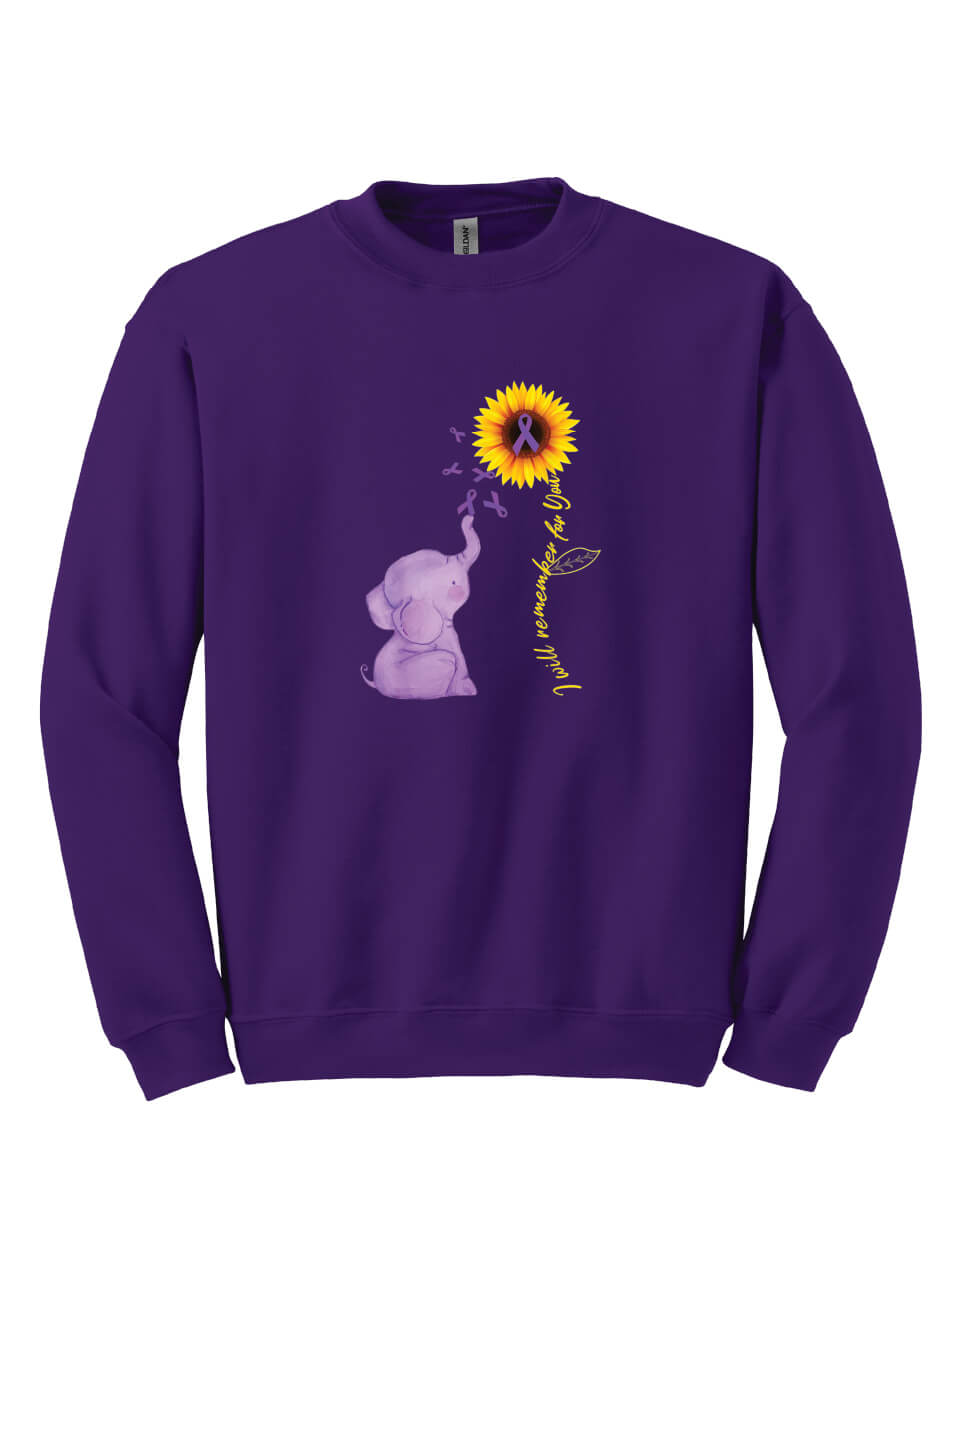 I Will Remember For You Crewneck Sweatshirt purple